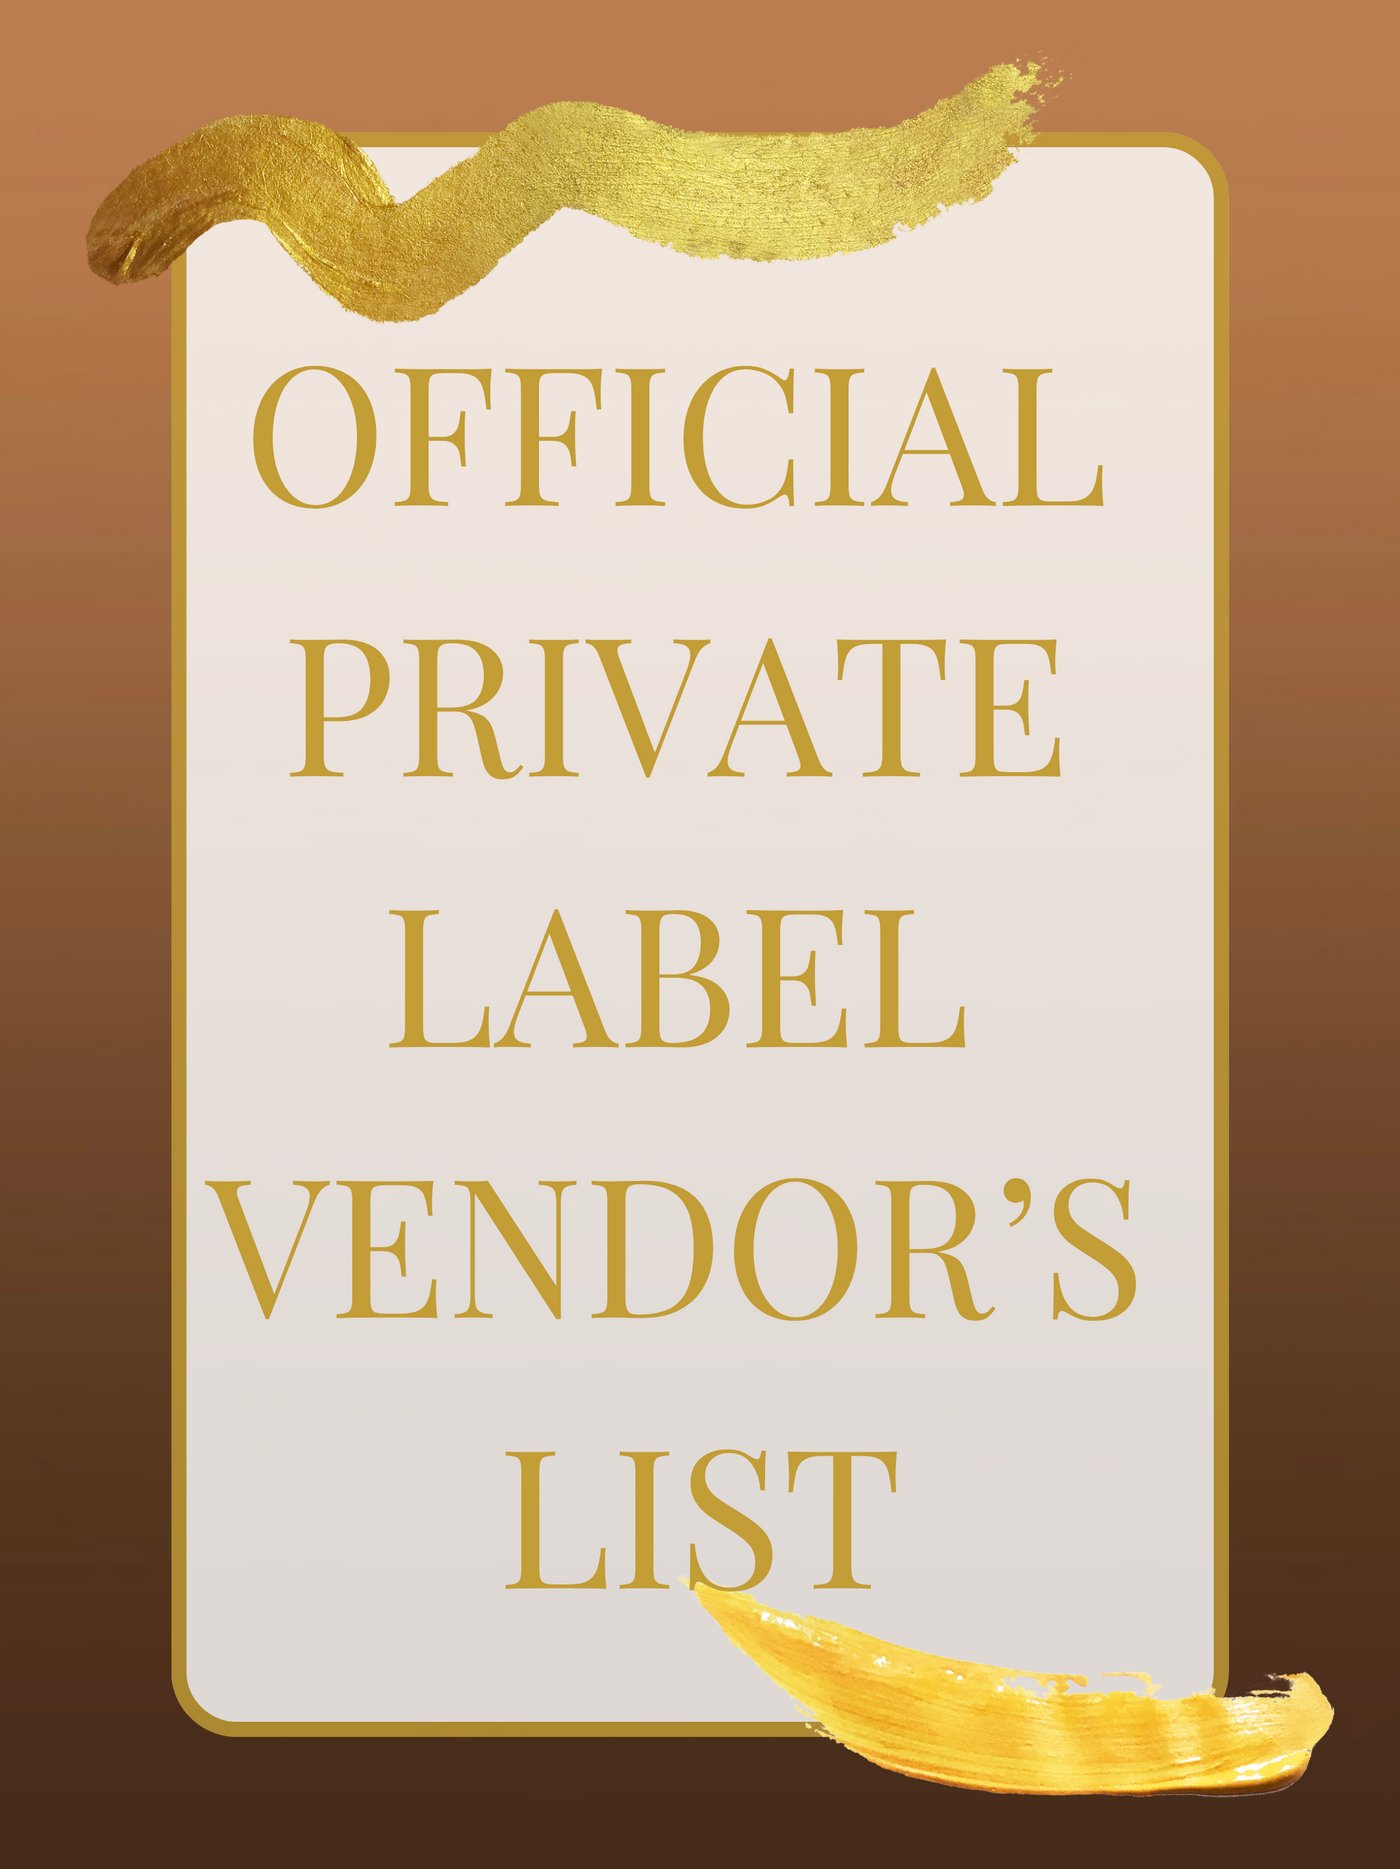 Official Vendor's List for Private Label Clients